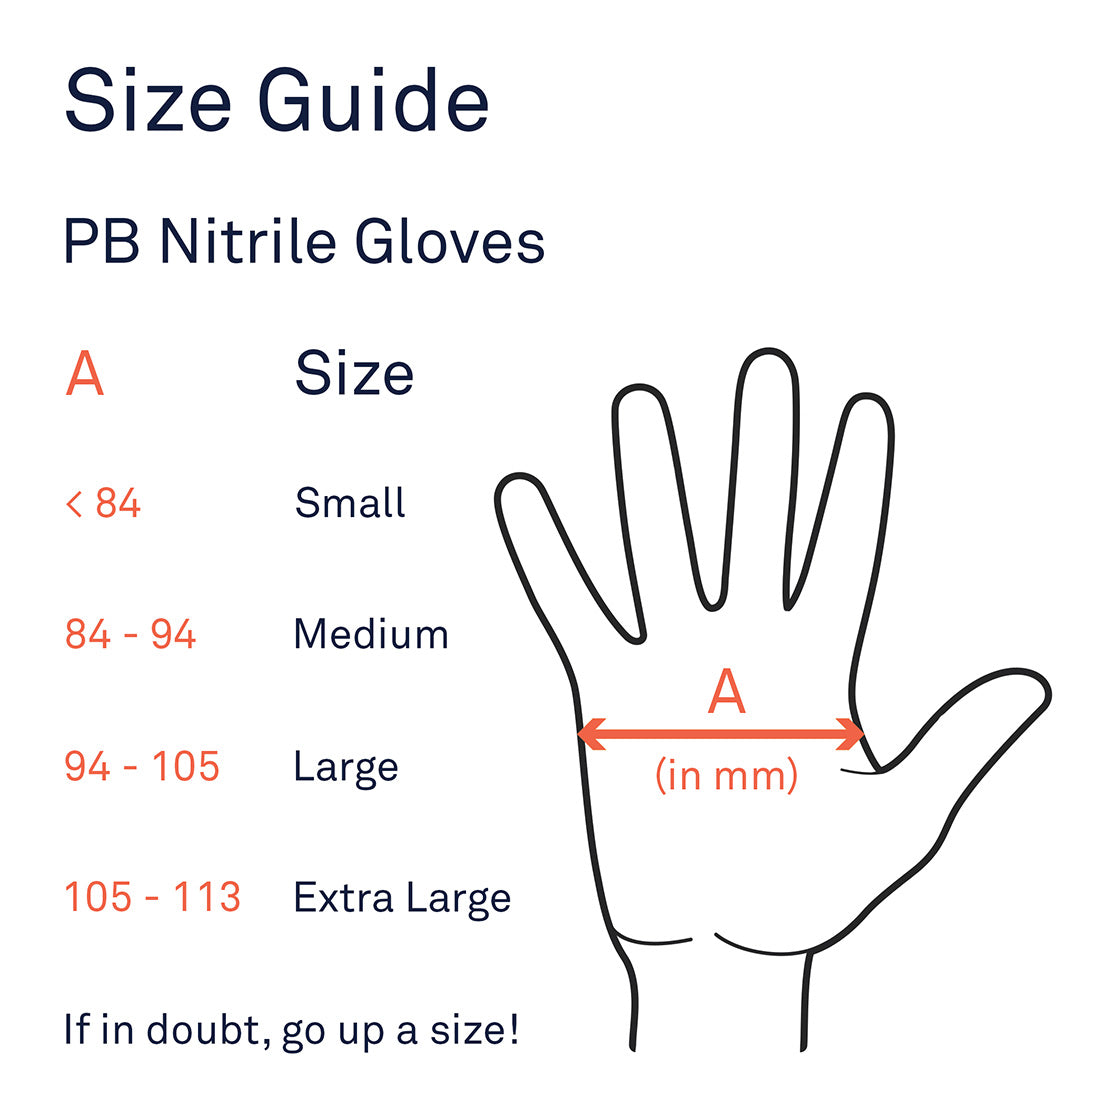 PB Nitrile Gloves